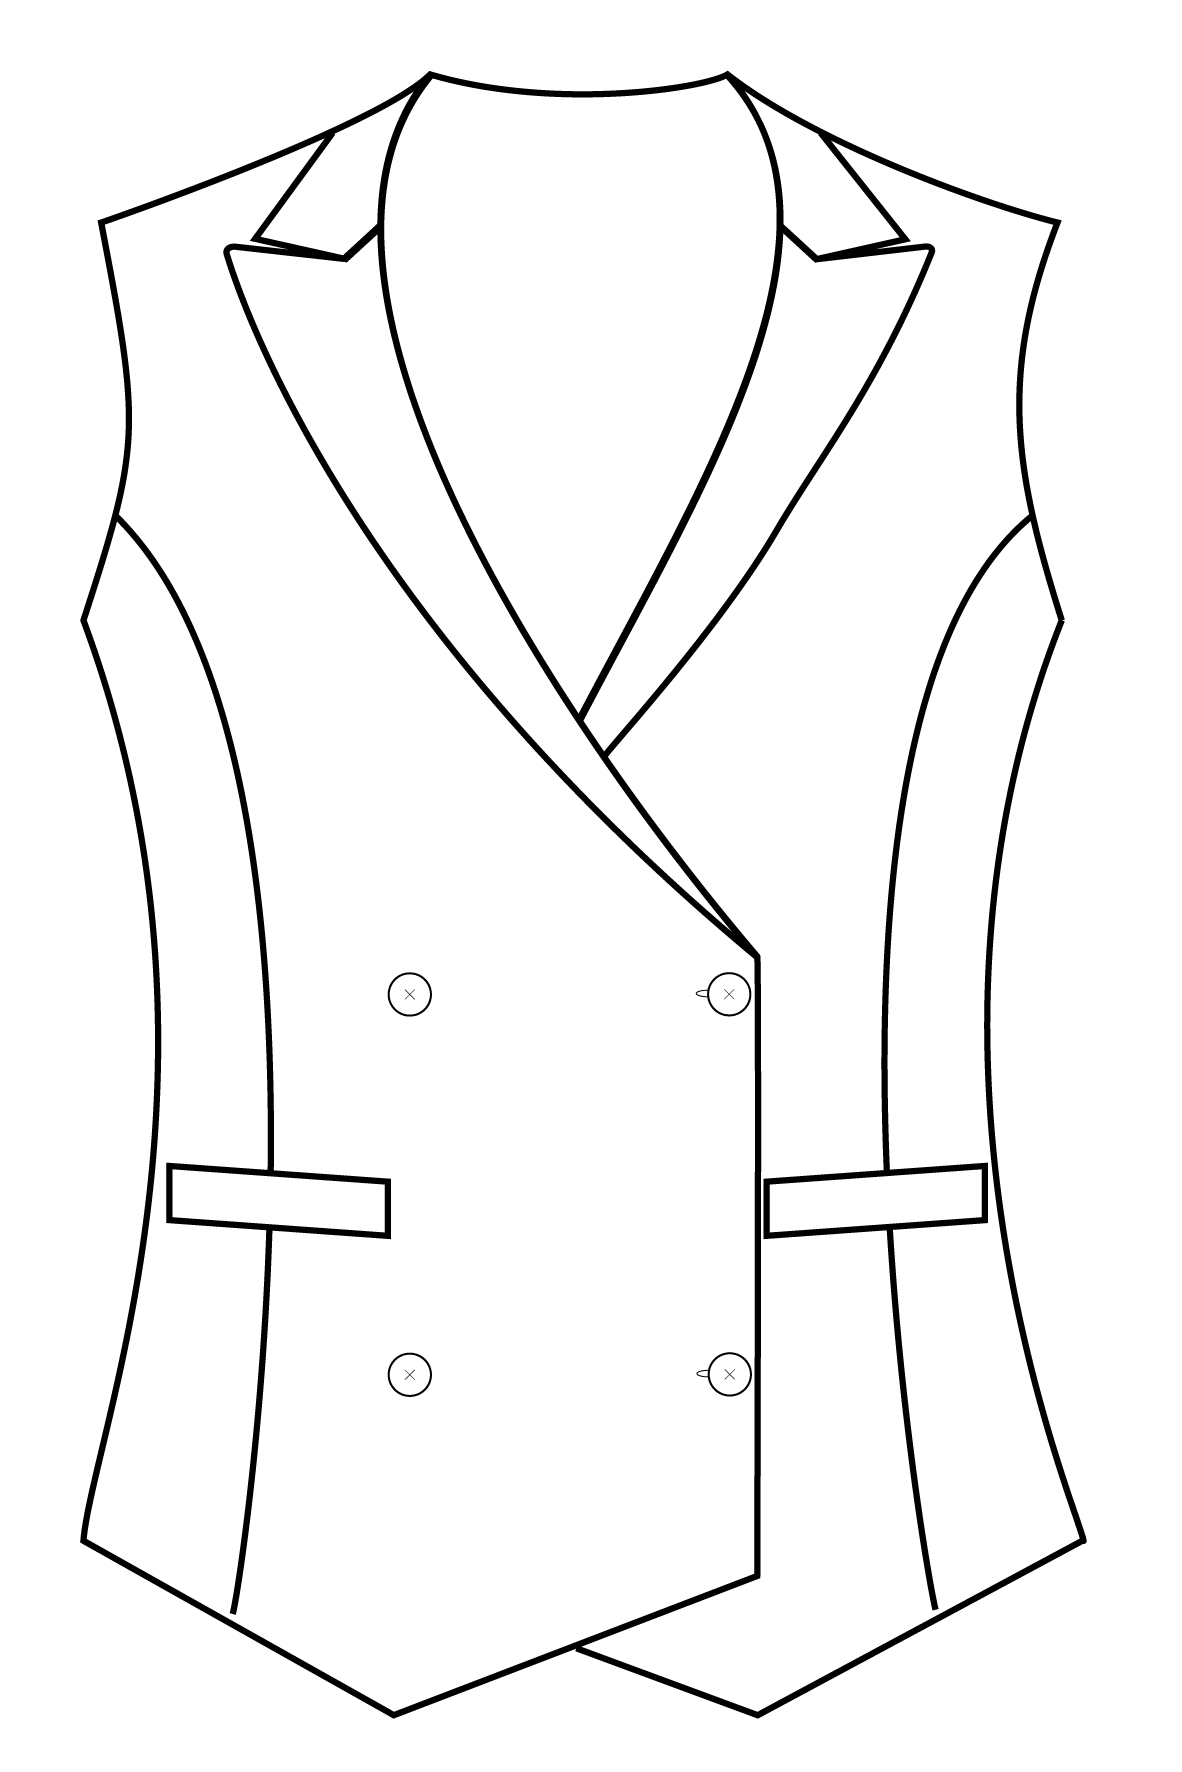 Dames Vesten en Gilets Modellen - Bespoke Tailoring: Maatpakken en maatkleding, hoe stijl en ambacht je kleding persoonlijk maken. - De Oost Bespoke Tailoring : Gekleed